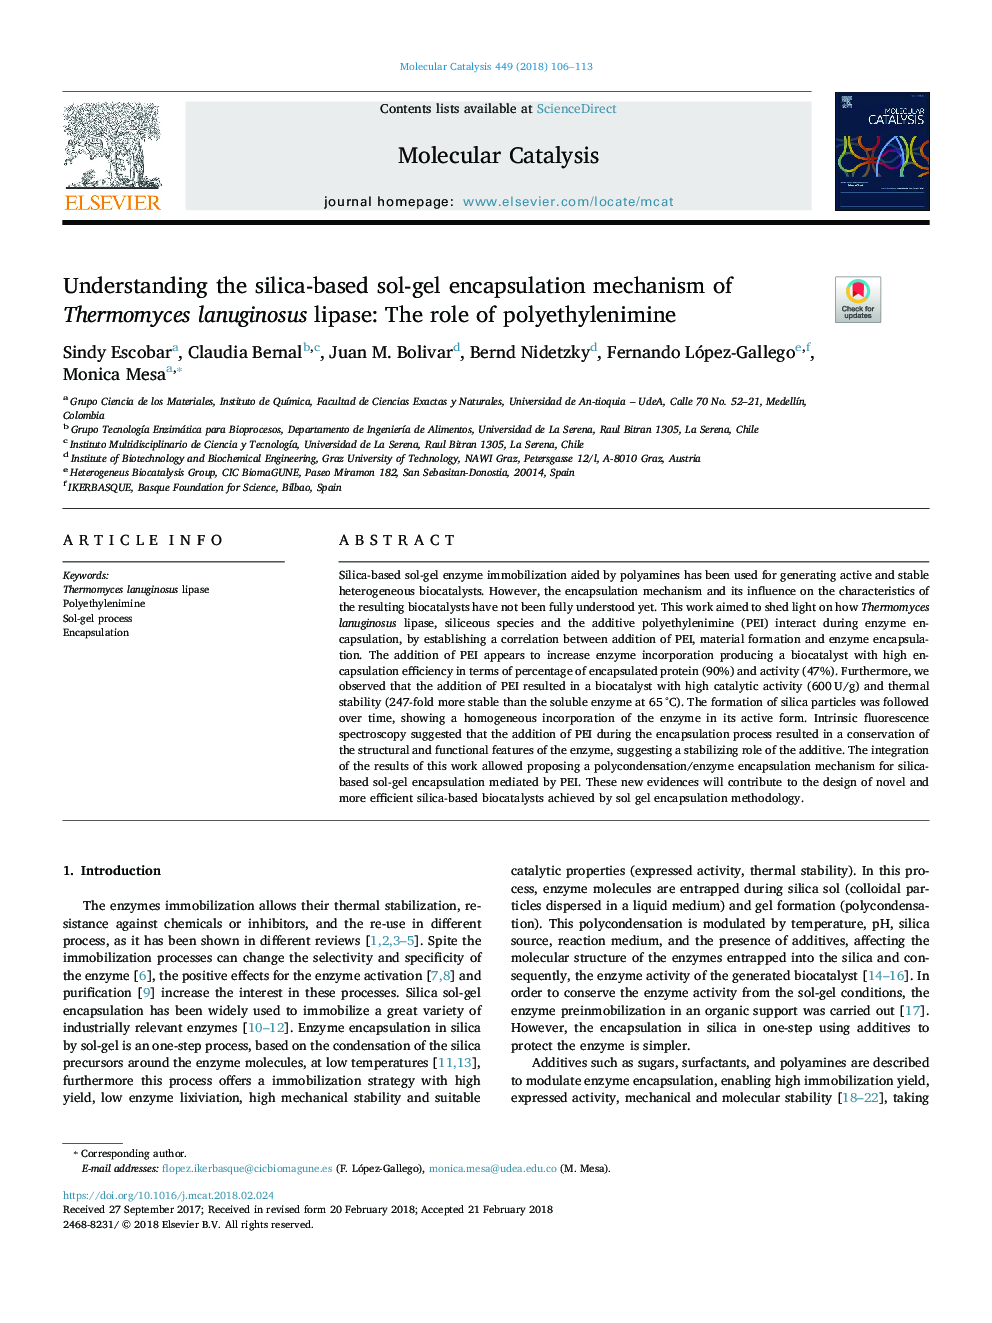 Understanding the silica-based sol-gel encapsulation mechanism of Thermomyces lanuginosus lipase: The role of polyethylenimine